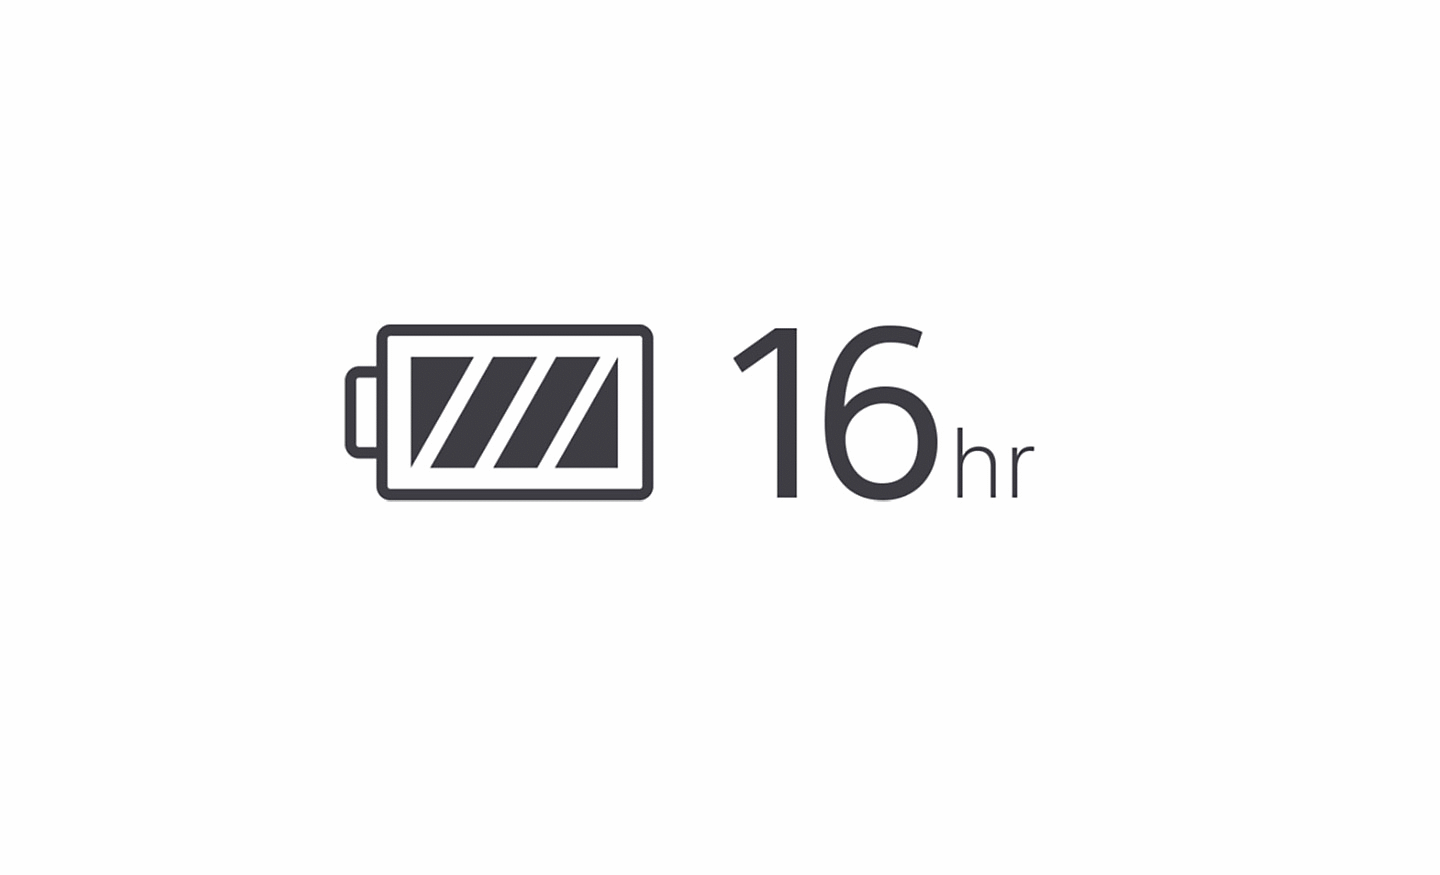 Slika ikone pune baterije, kraj nje je tekst “16hr”